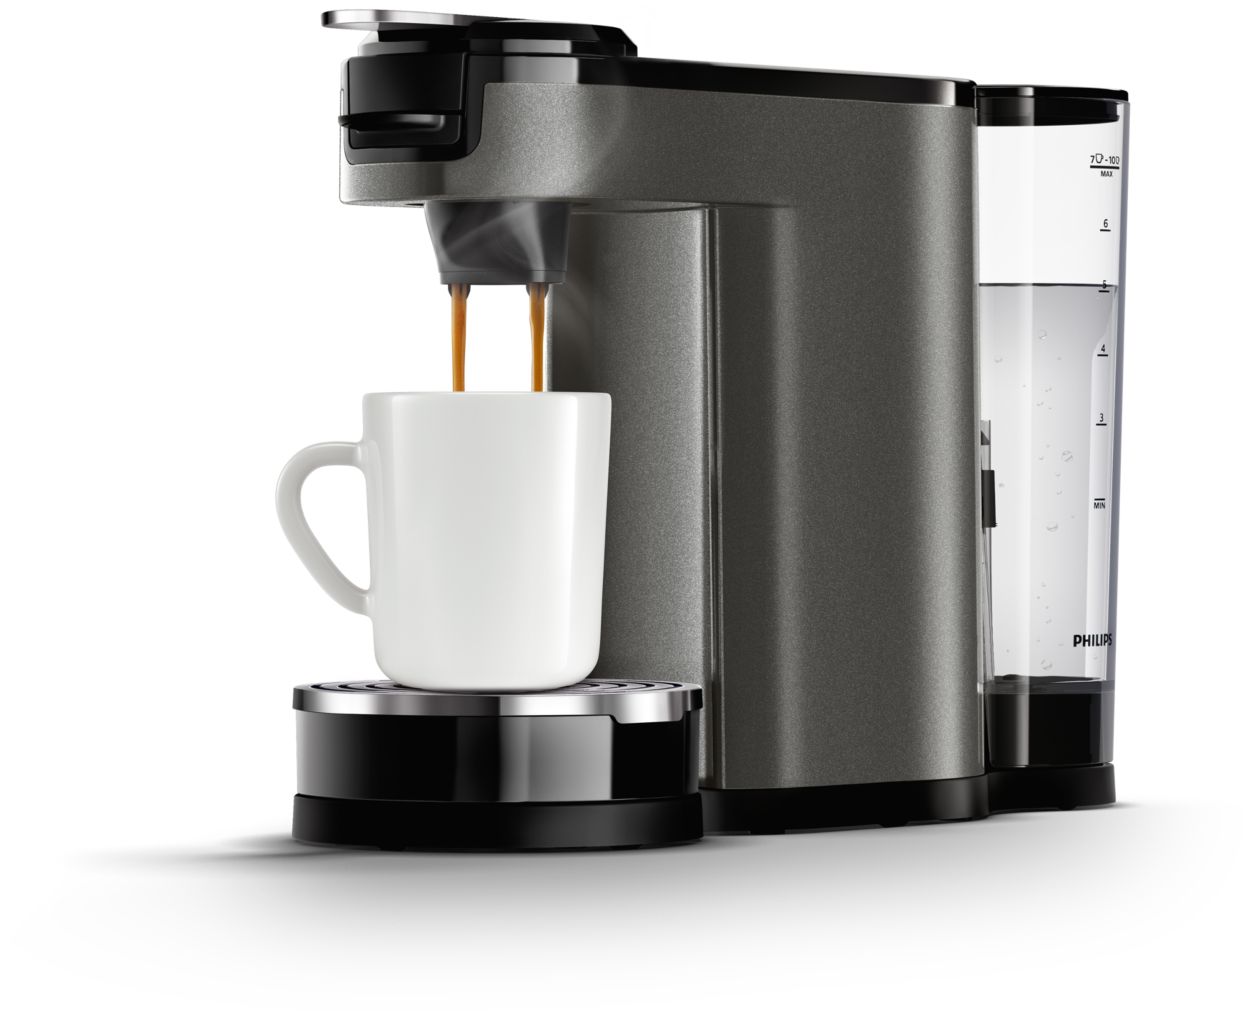 Senseo Switch 3in1 kaffebryggare Premium (titan) - Elgiganten